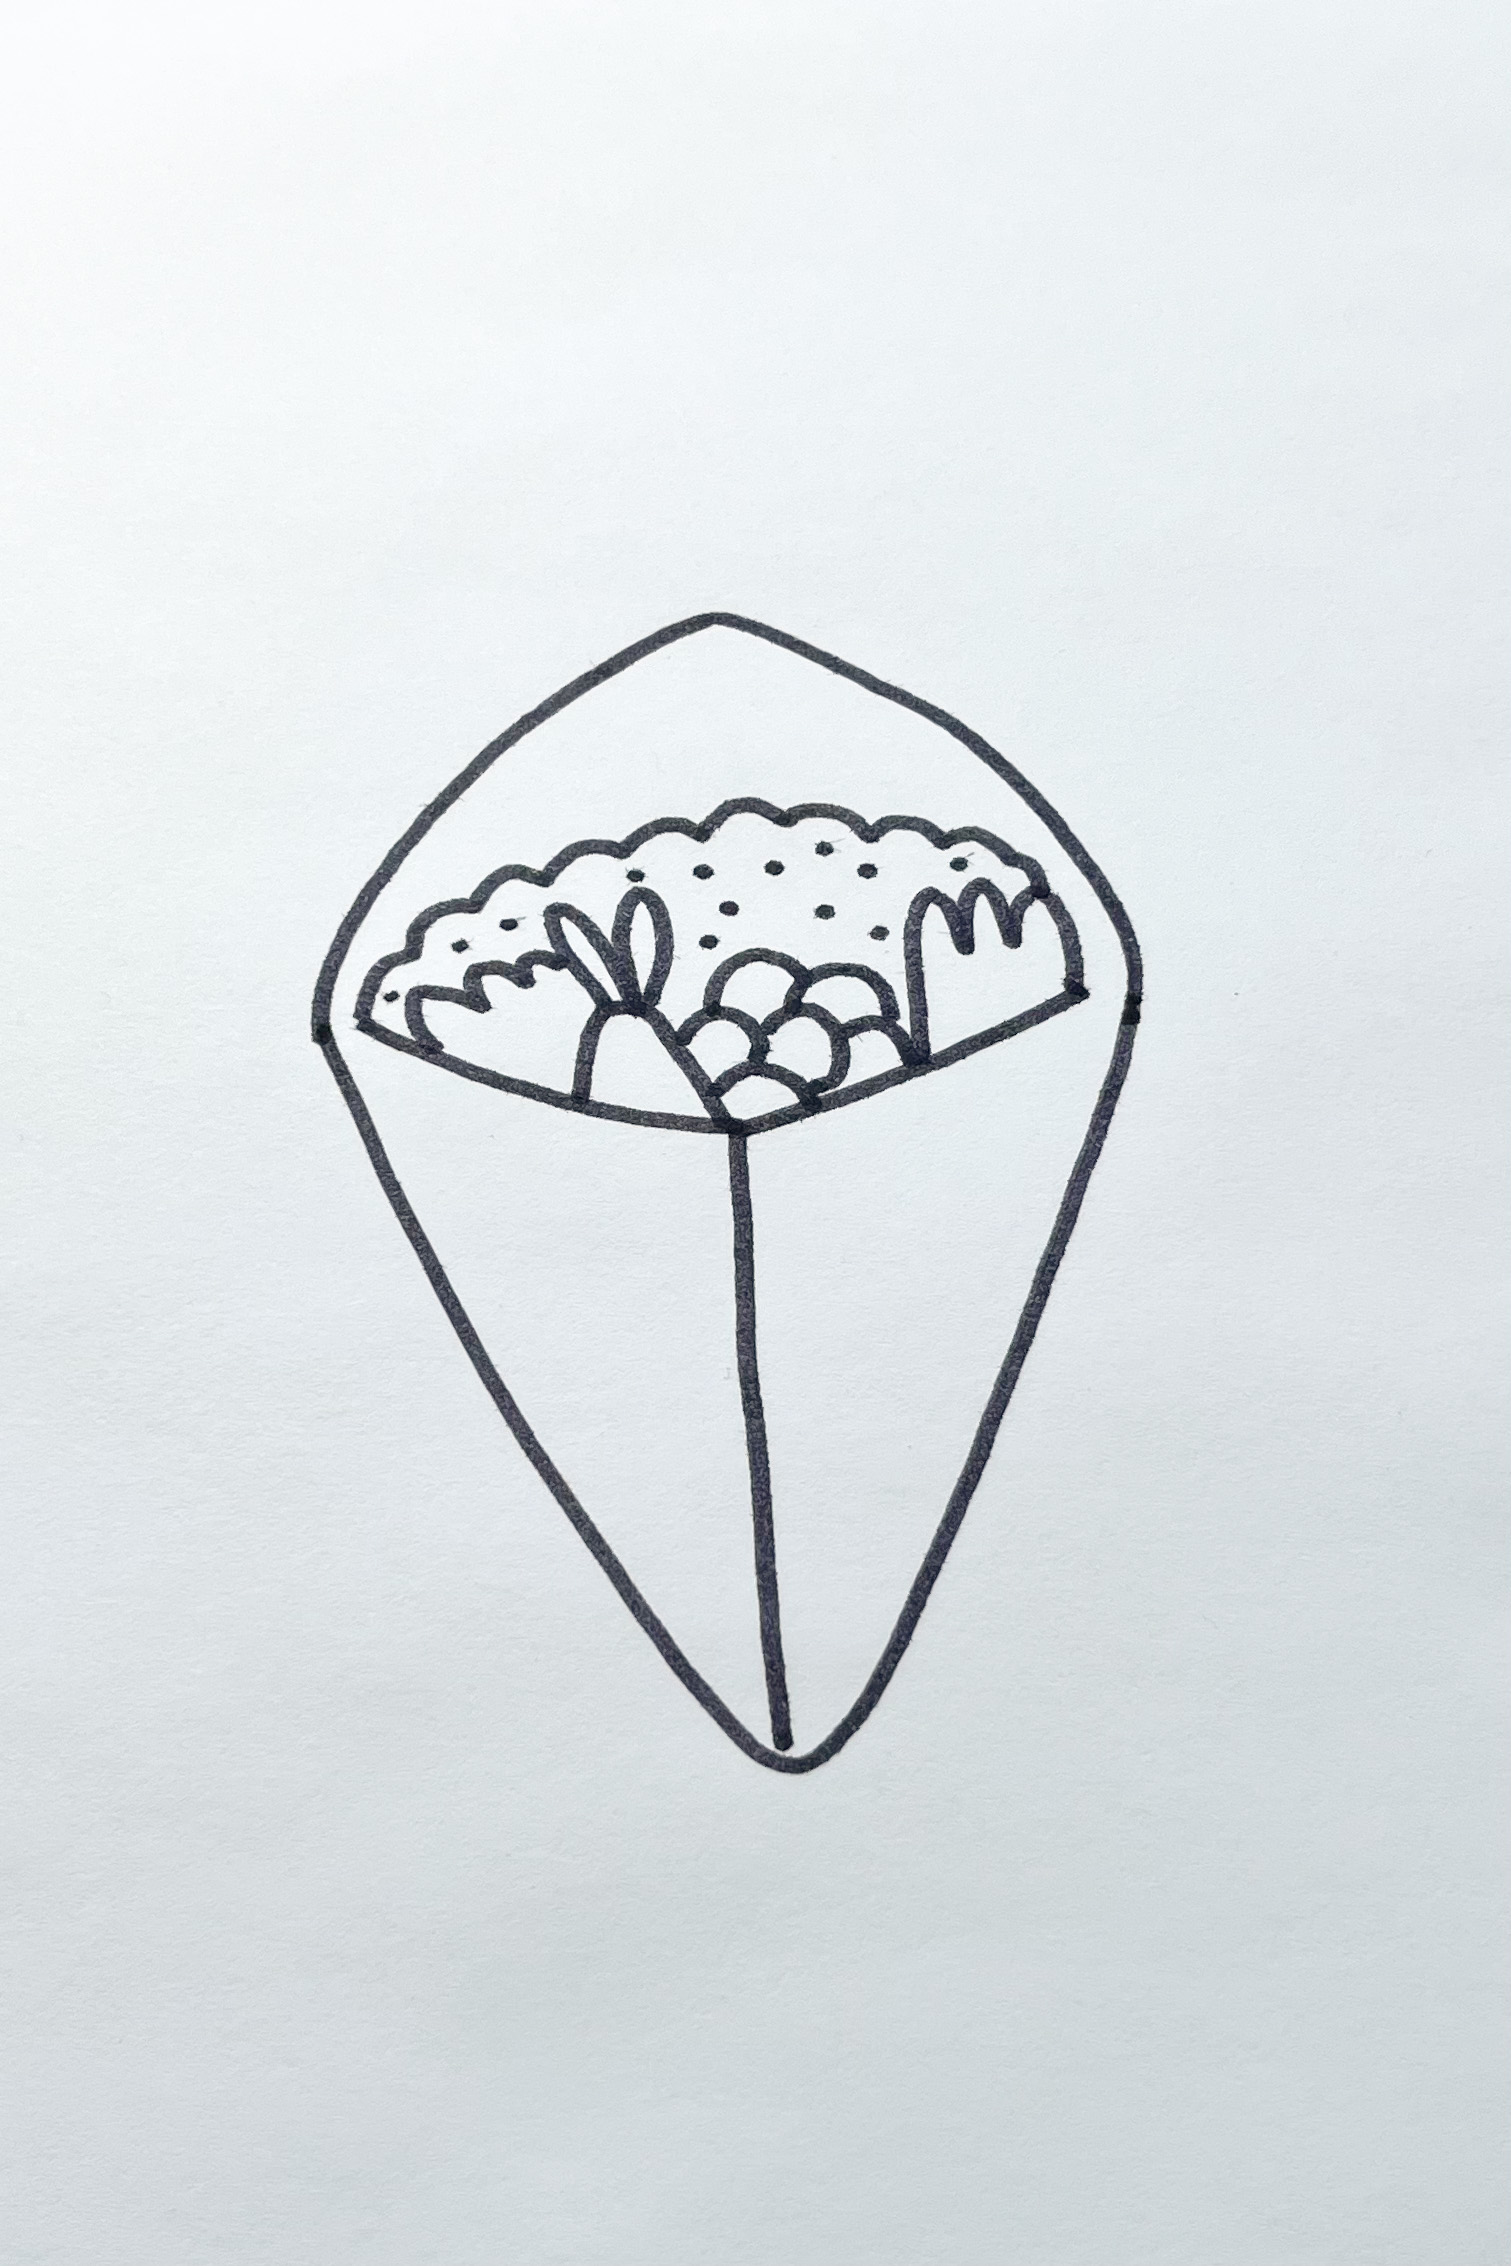 sushi cone drawing